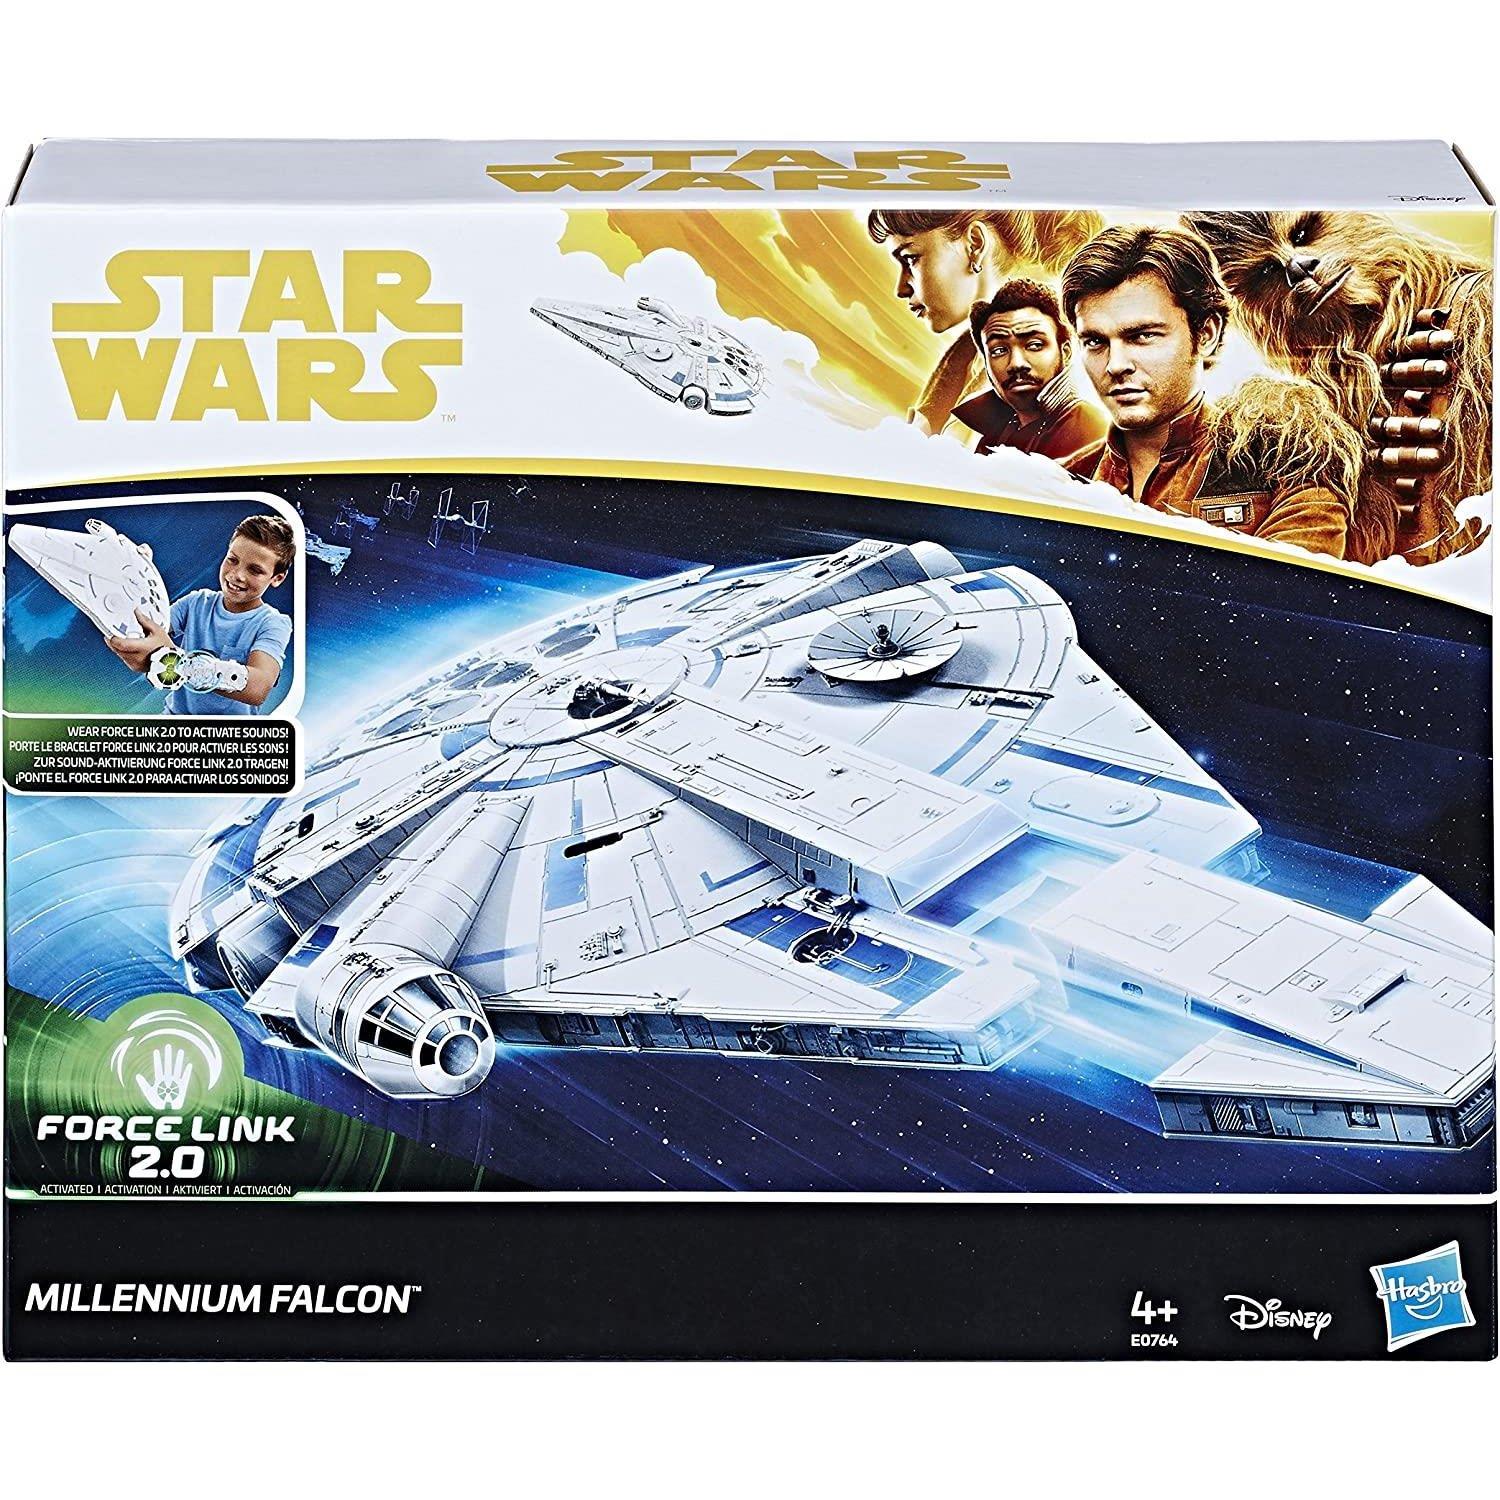 Star Wars Action Toy Star Wars SWU S2 Millennium Falcon Play Set